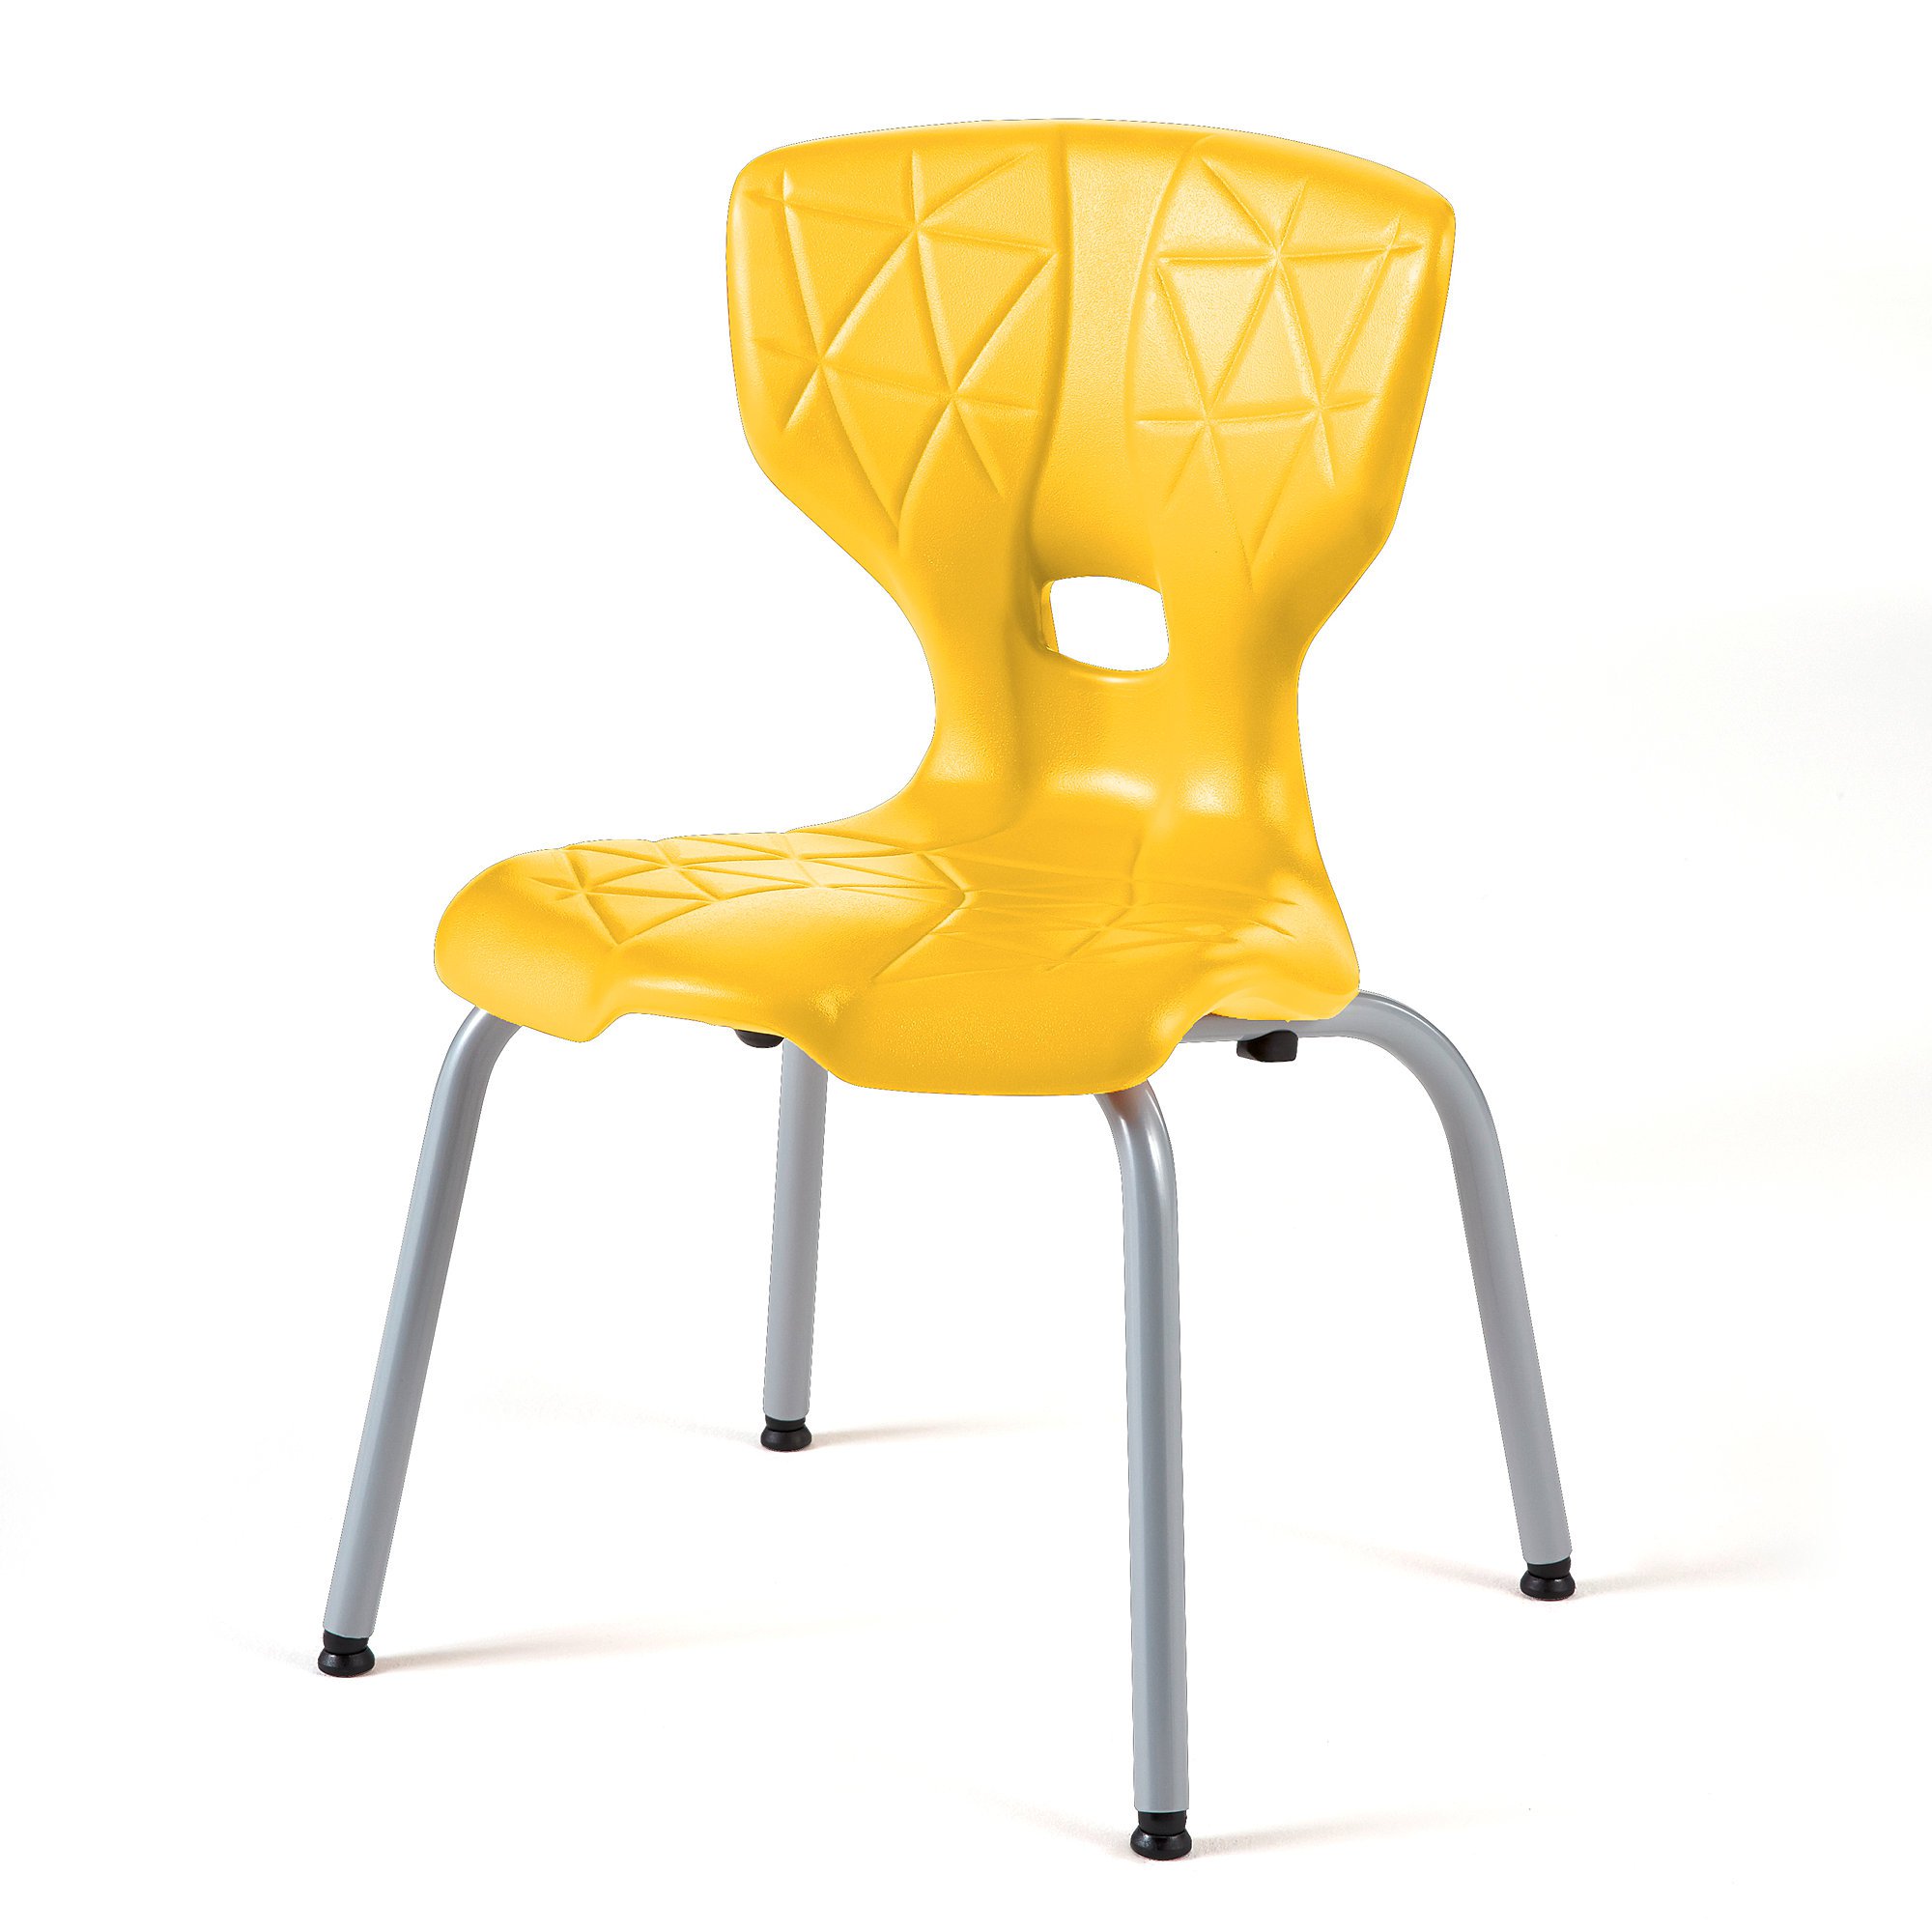 Children's chair ALDA I, H 350 mm, yellow